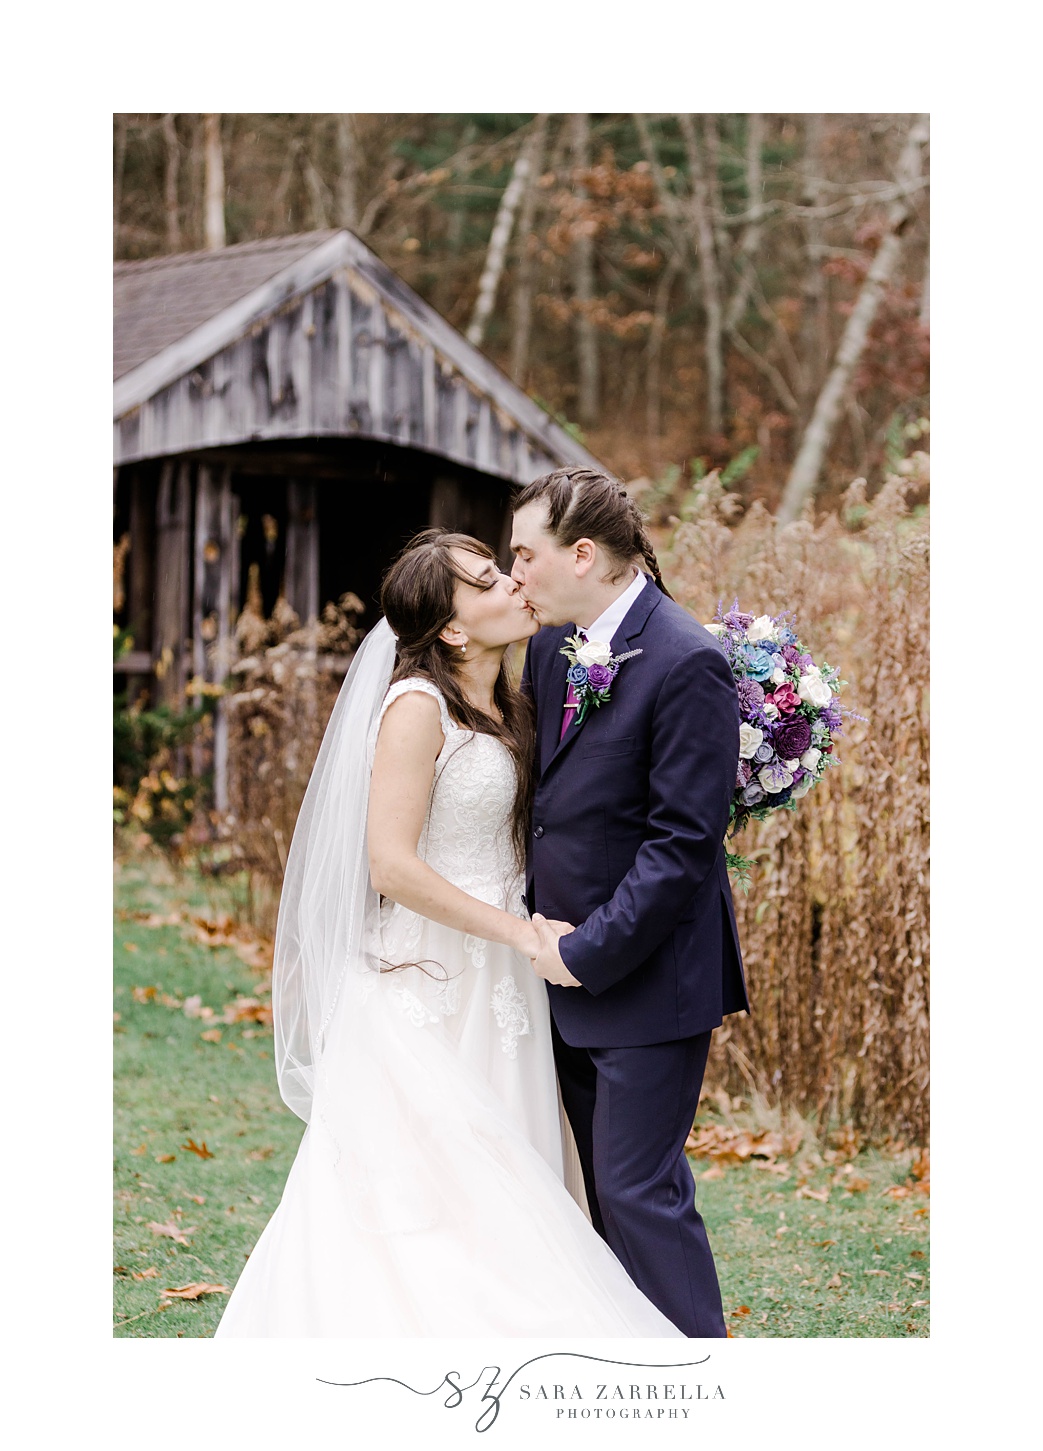 newlyweds kiss near wooden covered bridge 